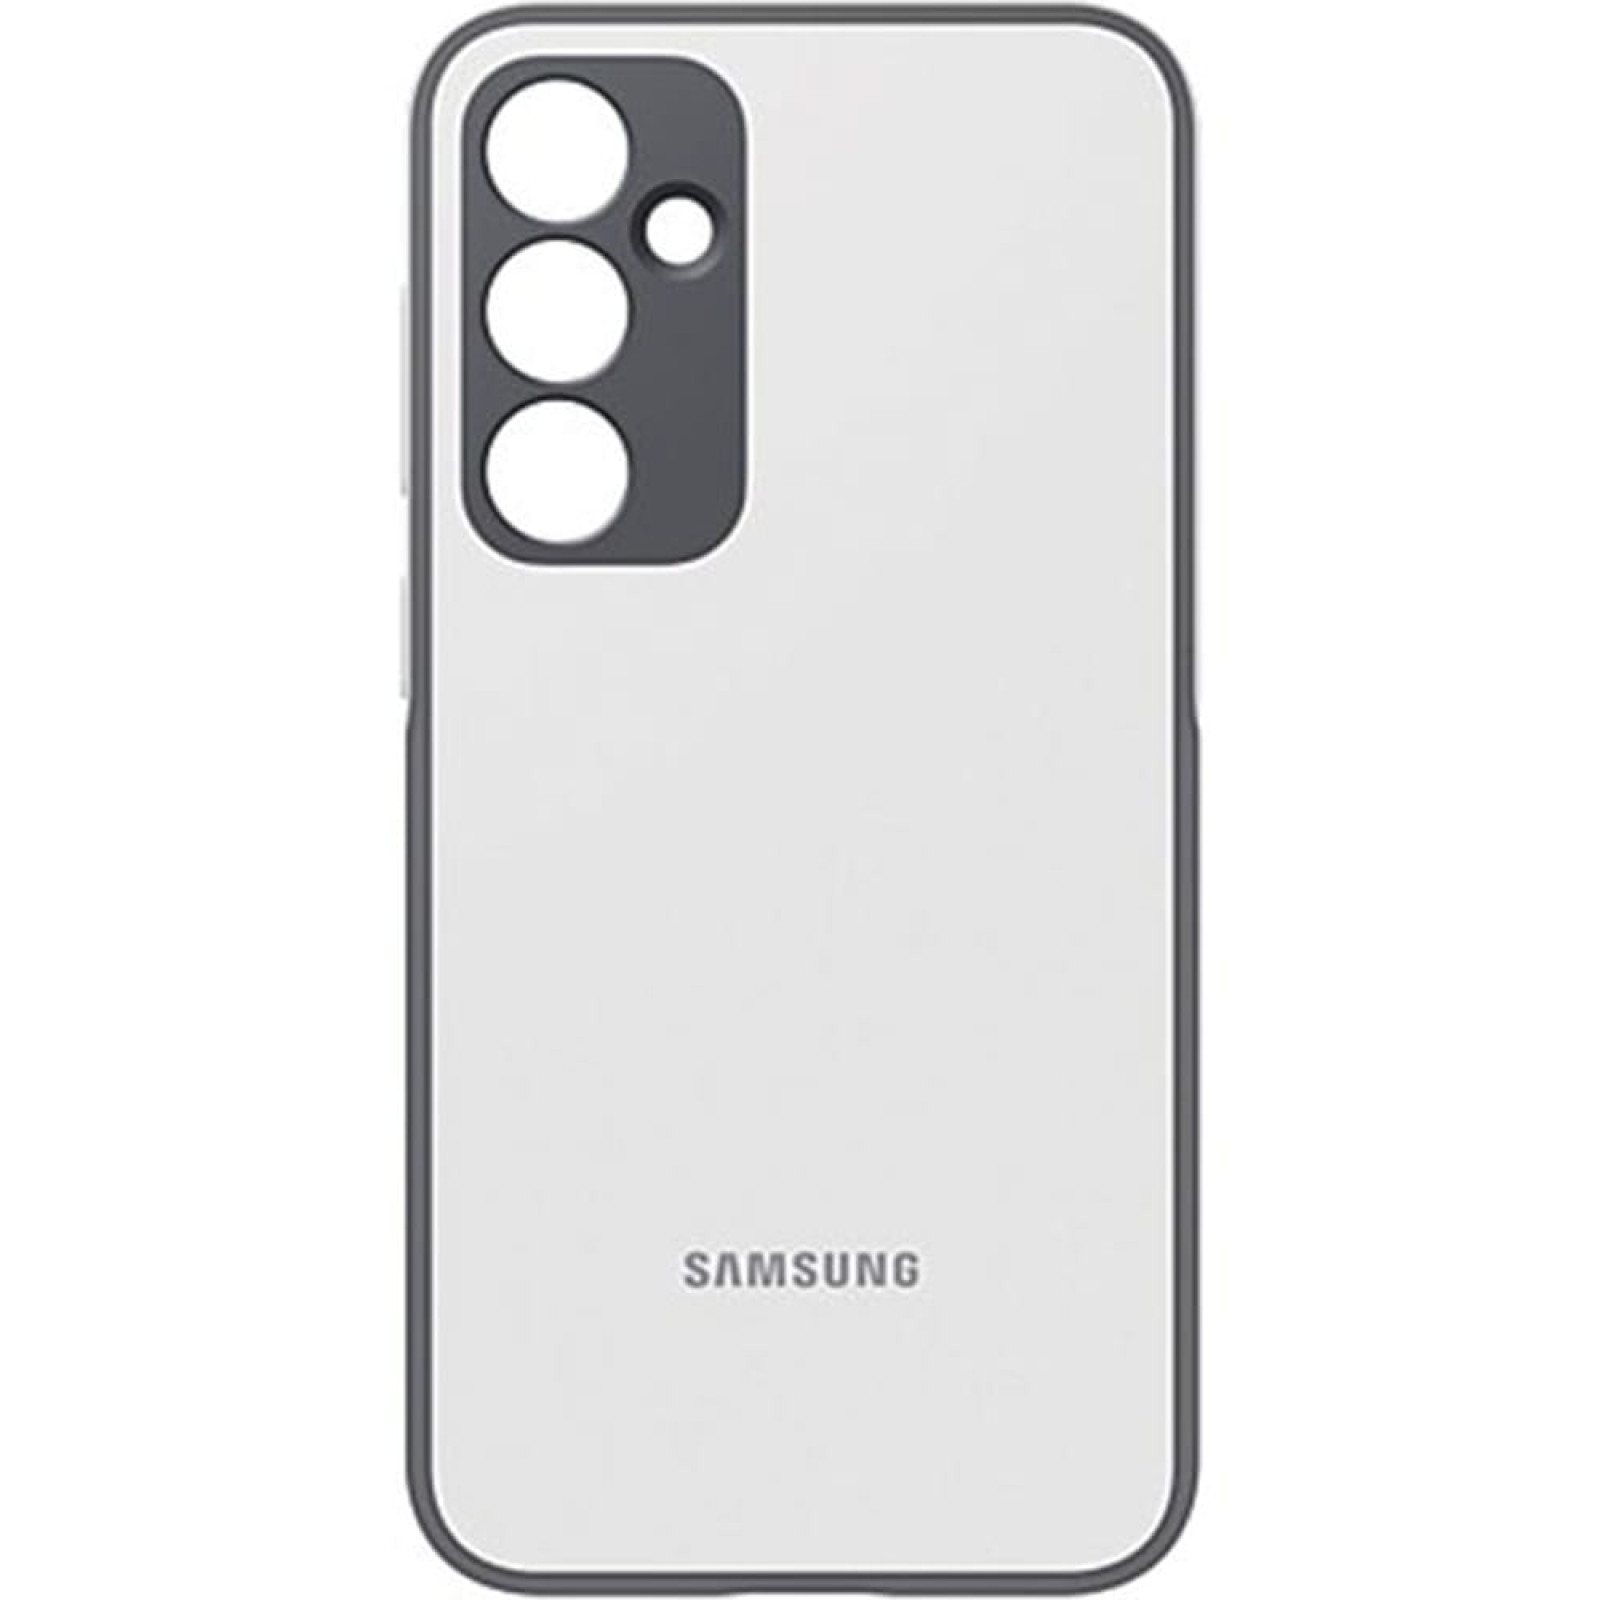 Оригинален гръб Samsung за Galaxy S23 FE, Silicone Cover, Светло сив, EF-PS711TWE